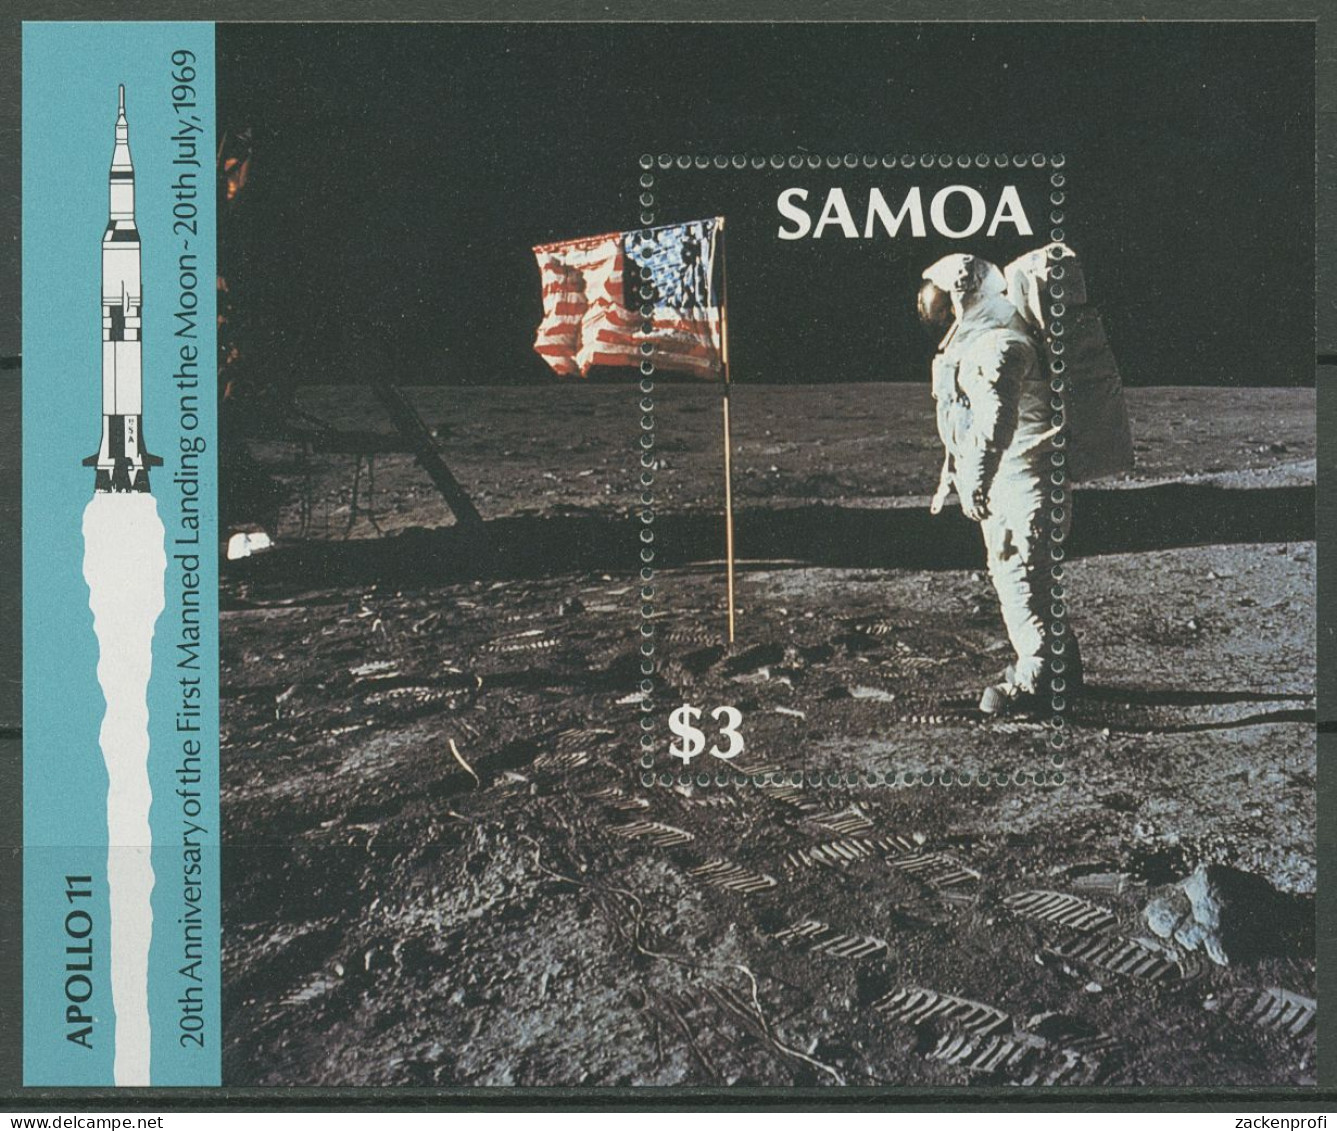 Samoa 1989 Raumfahrt 20 Jahre Mondlandung Block 46 Postfrisch (C40112) - Samoa